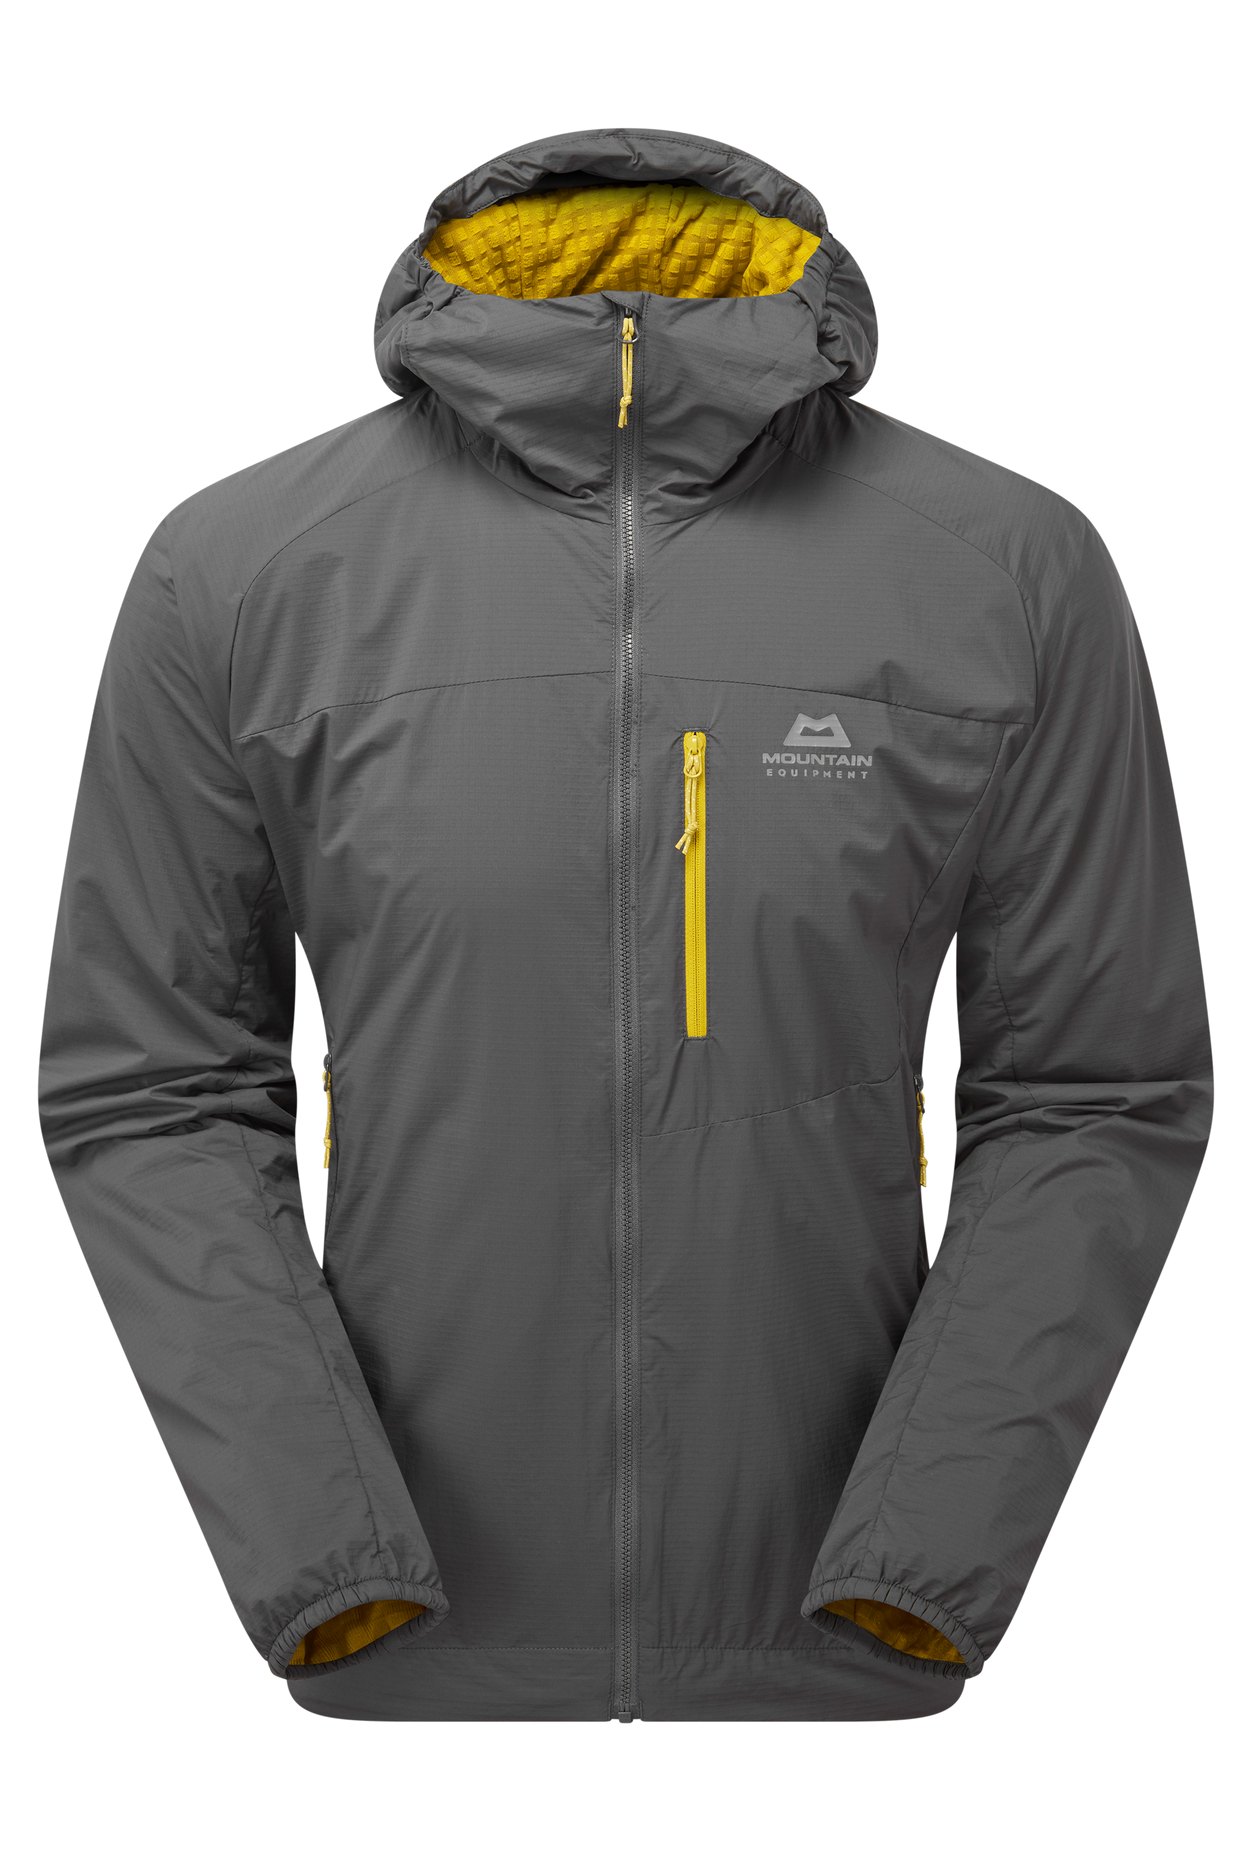 Mountain equipment pánská větruodolná bunda Aerotherm Mens Jacket Barva: Anvil Grey, Velikost: L